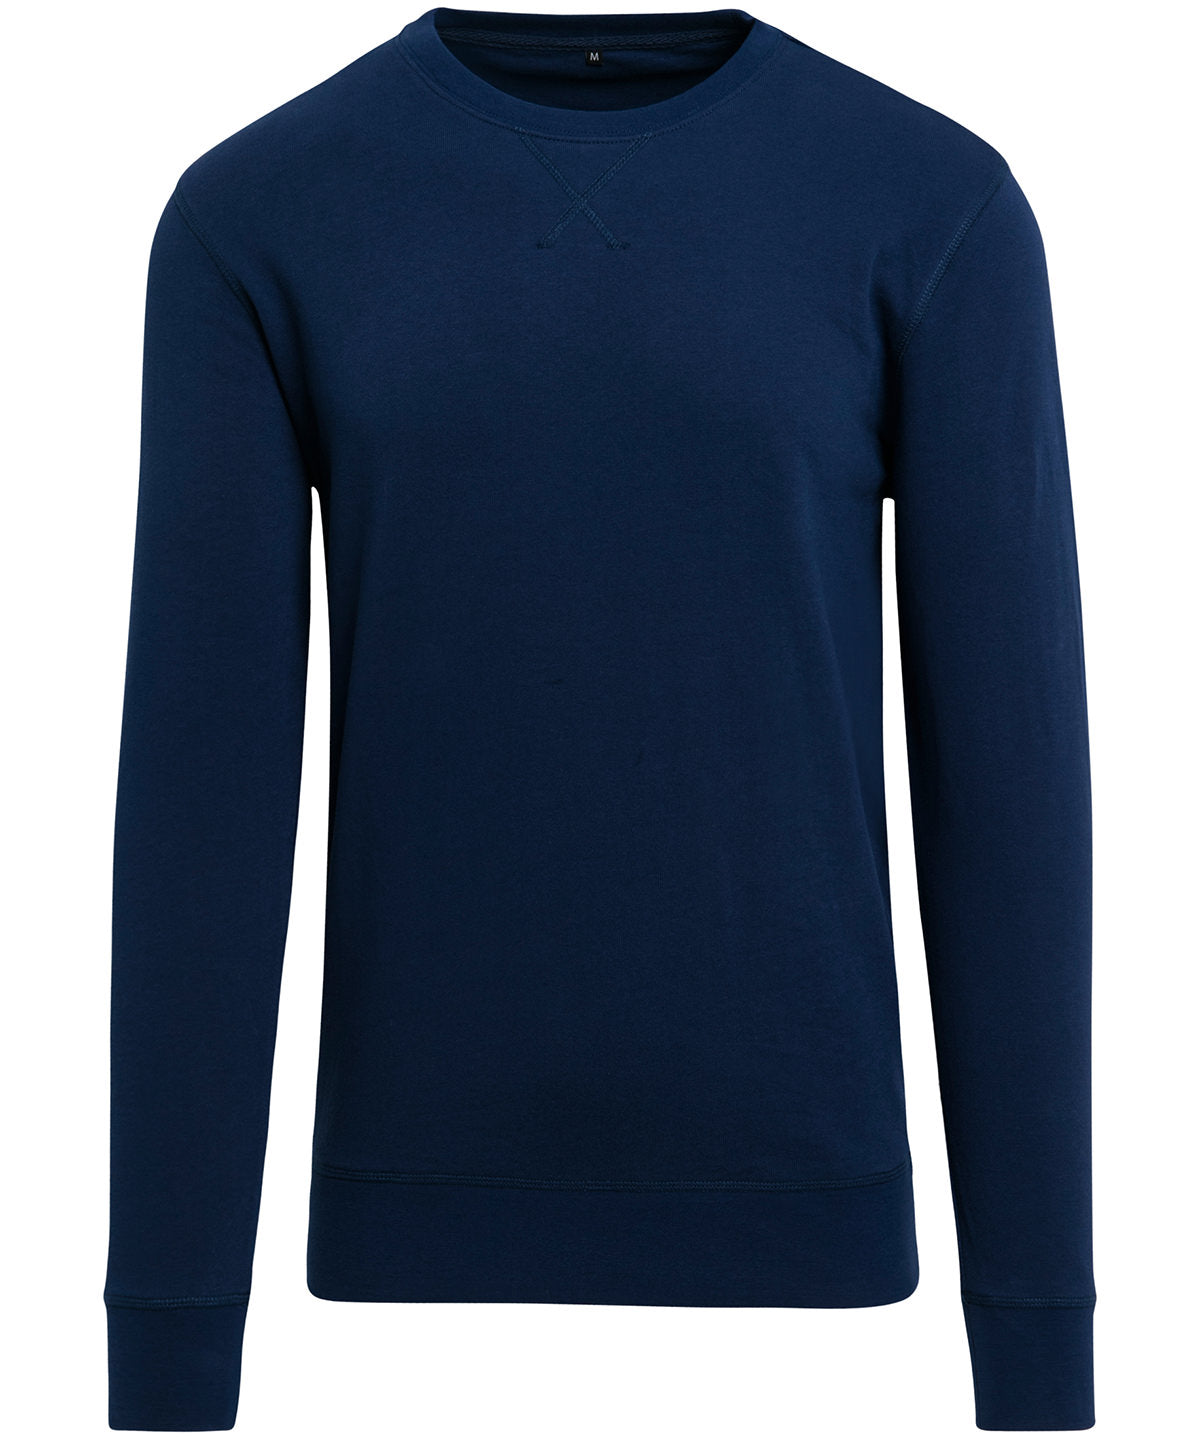 Personalised Sweatshirts - Black Build Your Brand Light crew sweatshirt